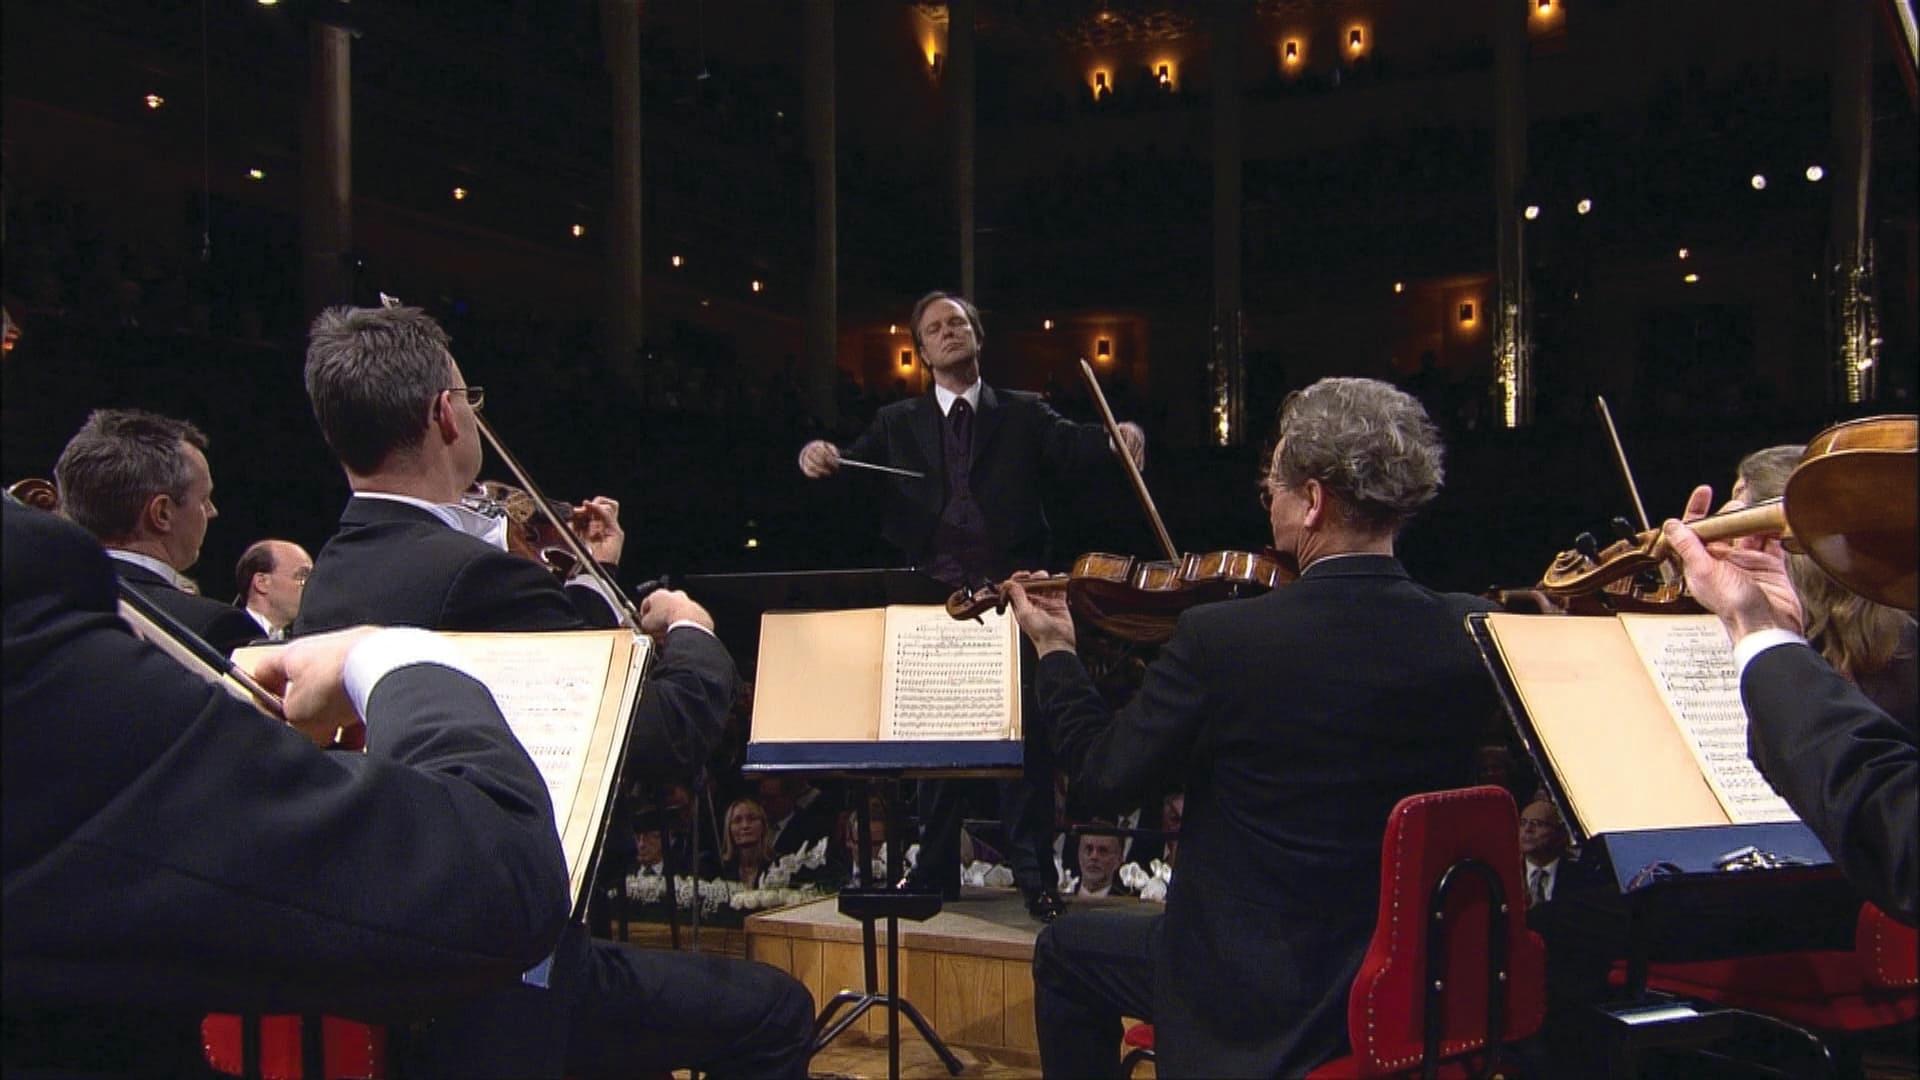 Joshua Bell - Nobel Prize Concert backdrop